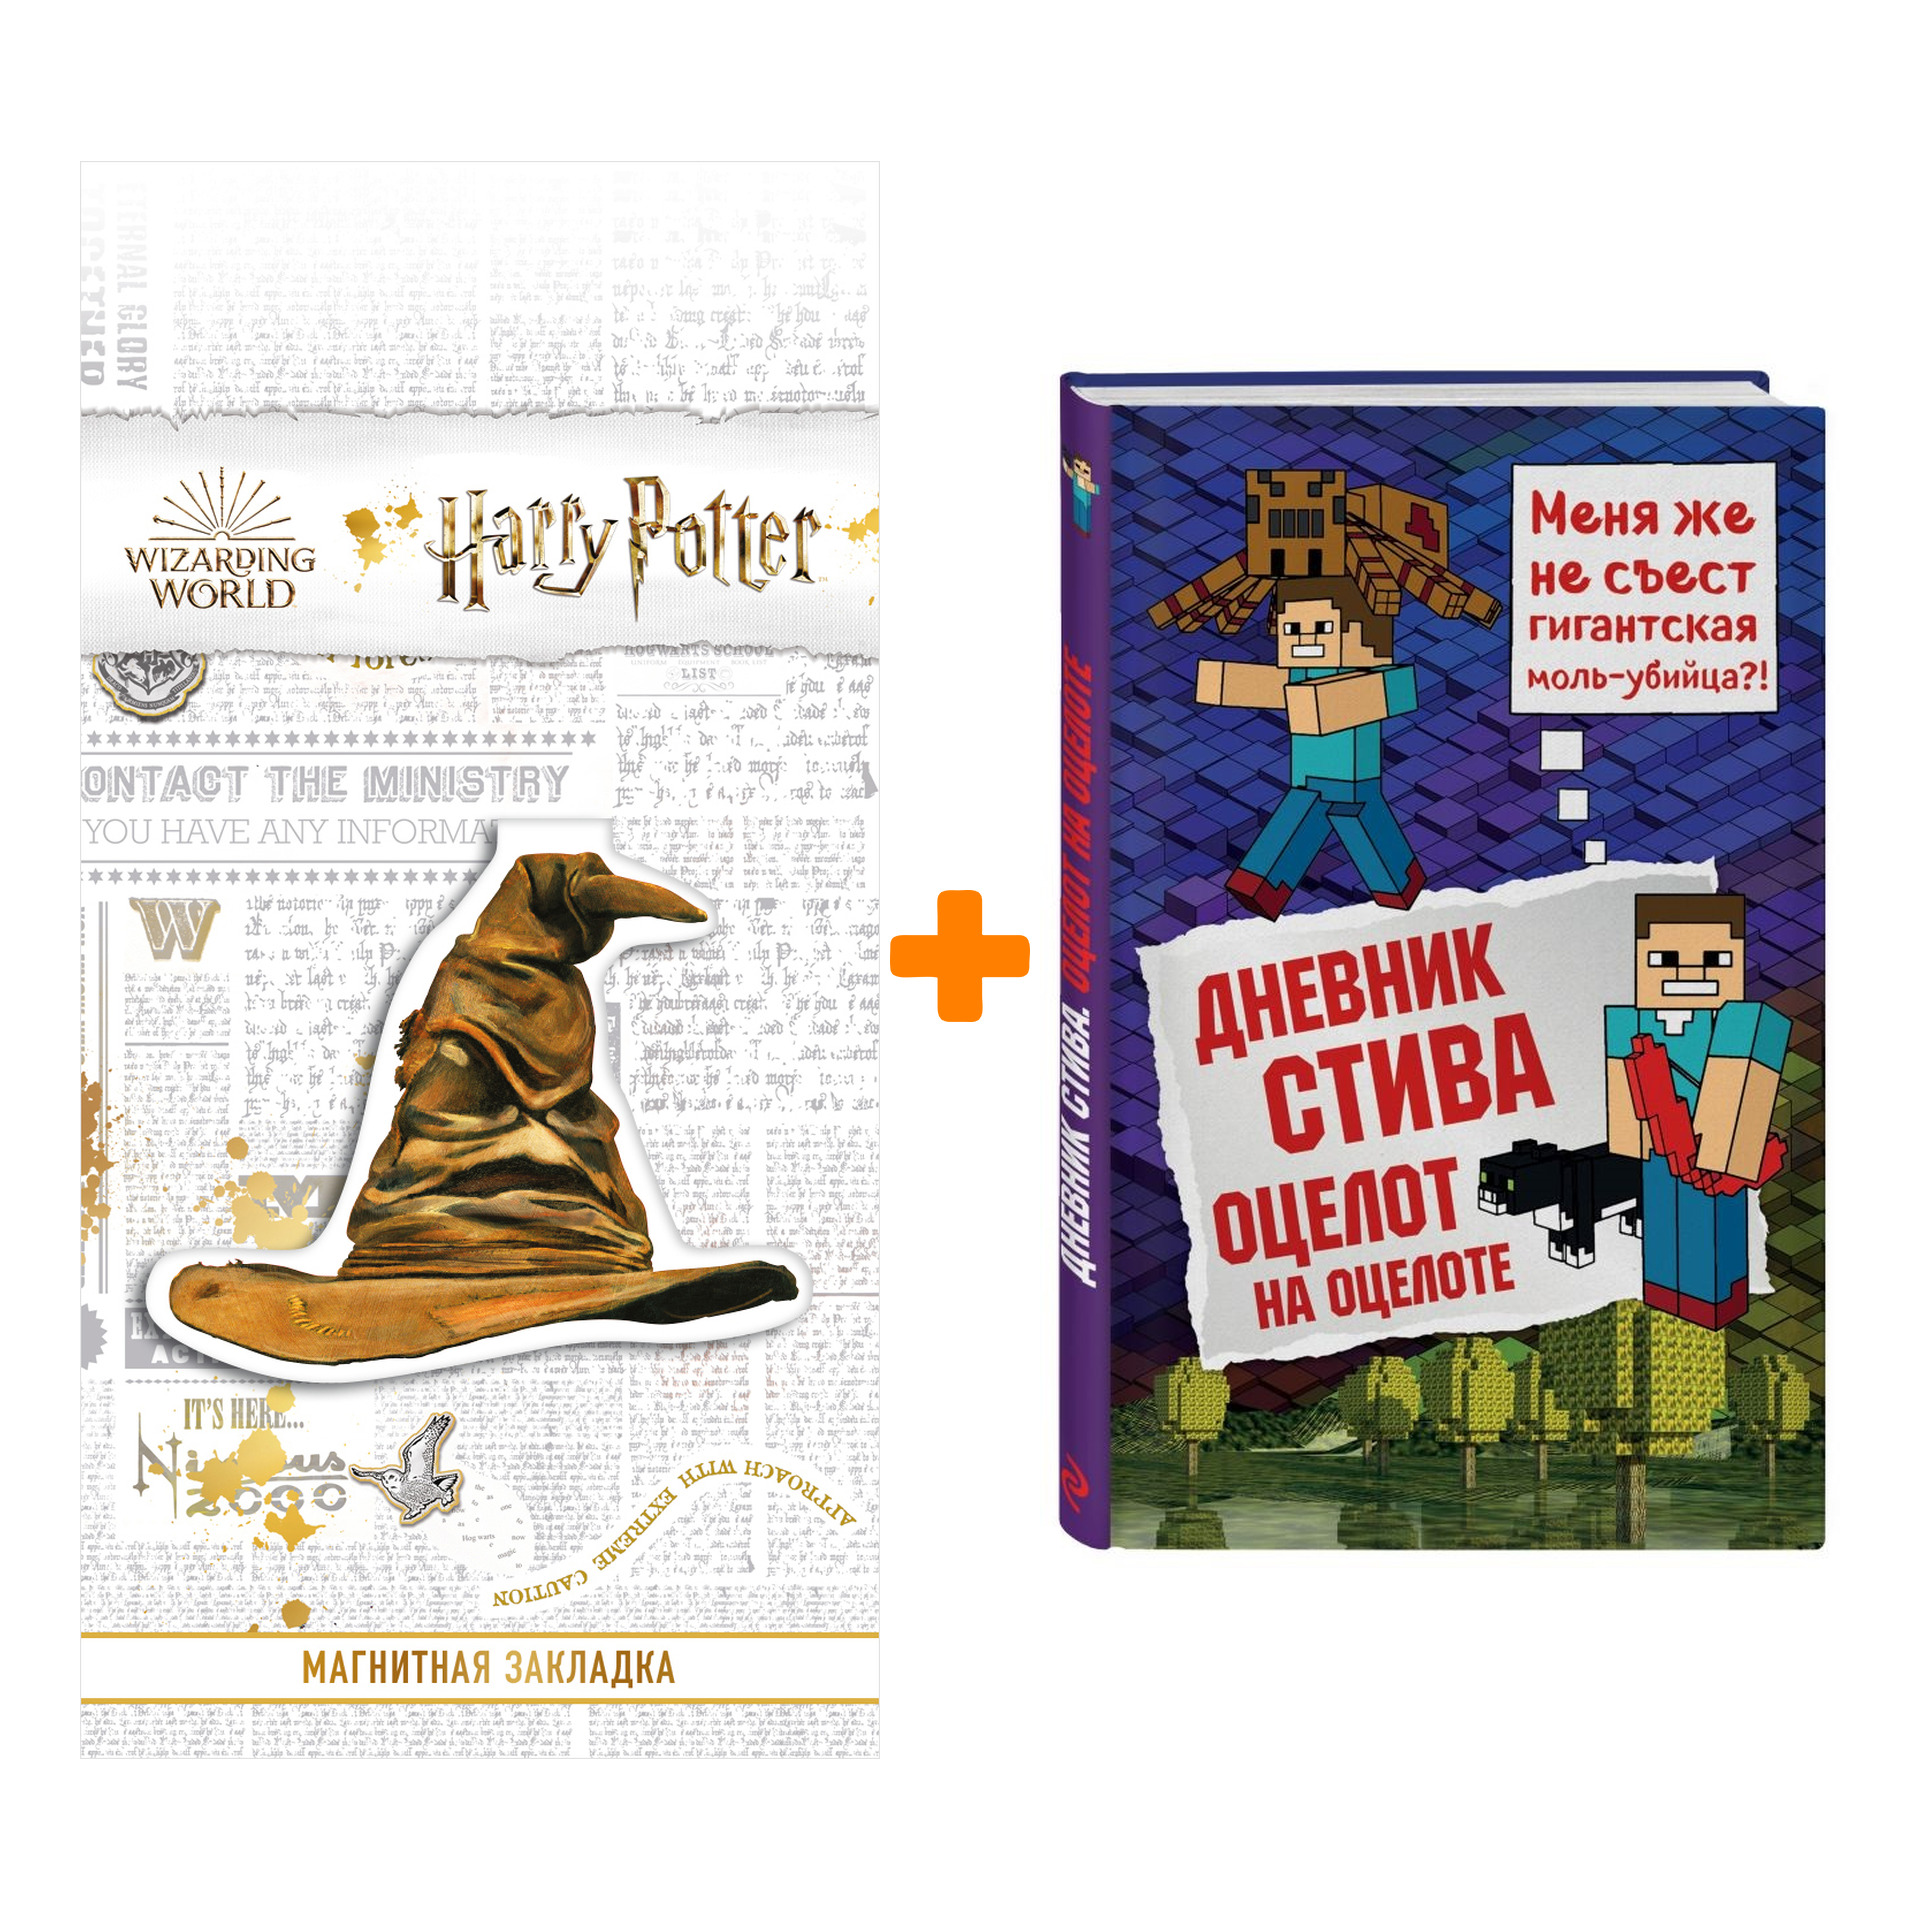 Набор Дневник Стива Книга 4 Оцелот на оцелоте + Закладка Harry Potter Распределяющая шляпа магнитная